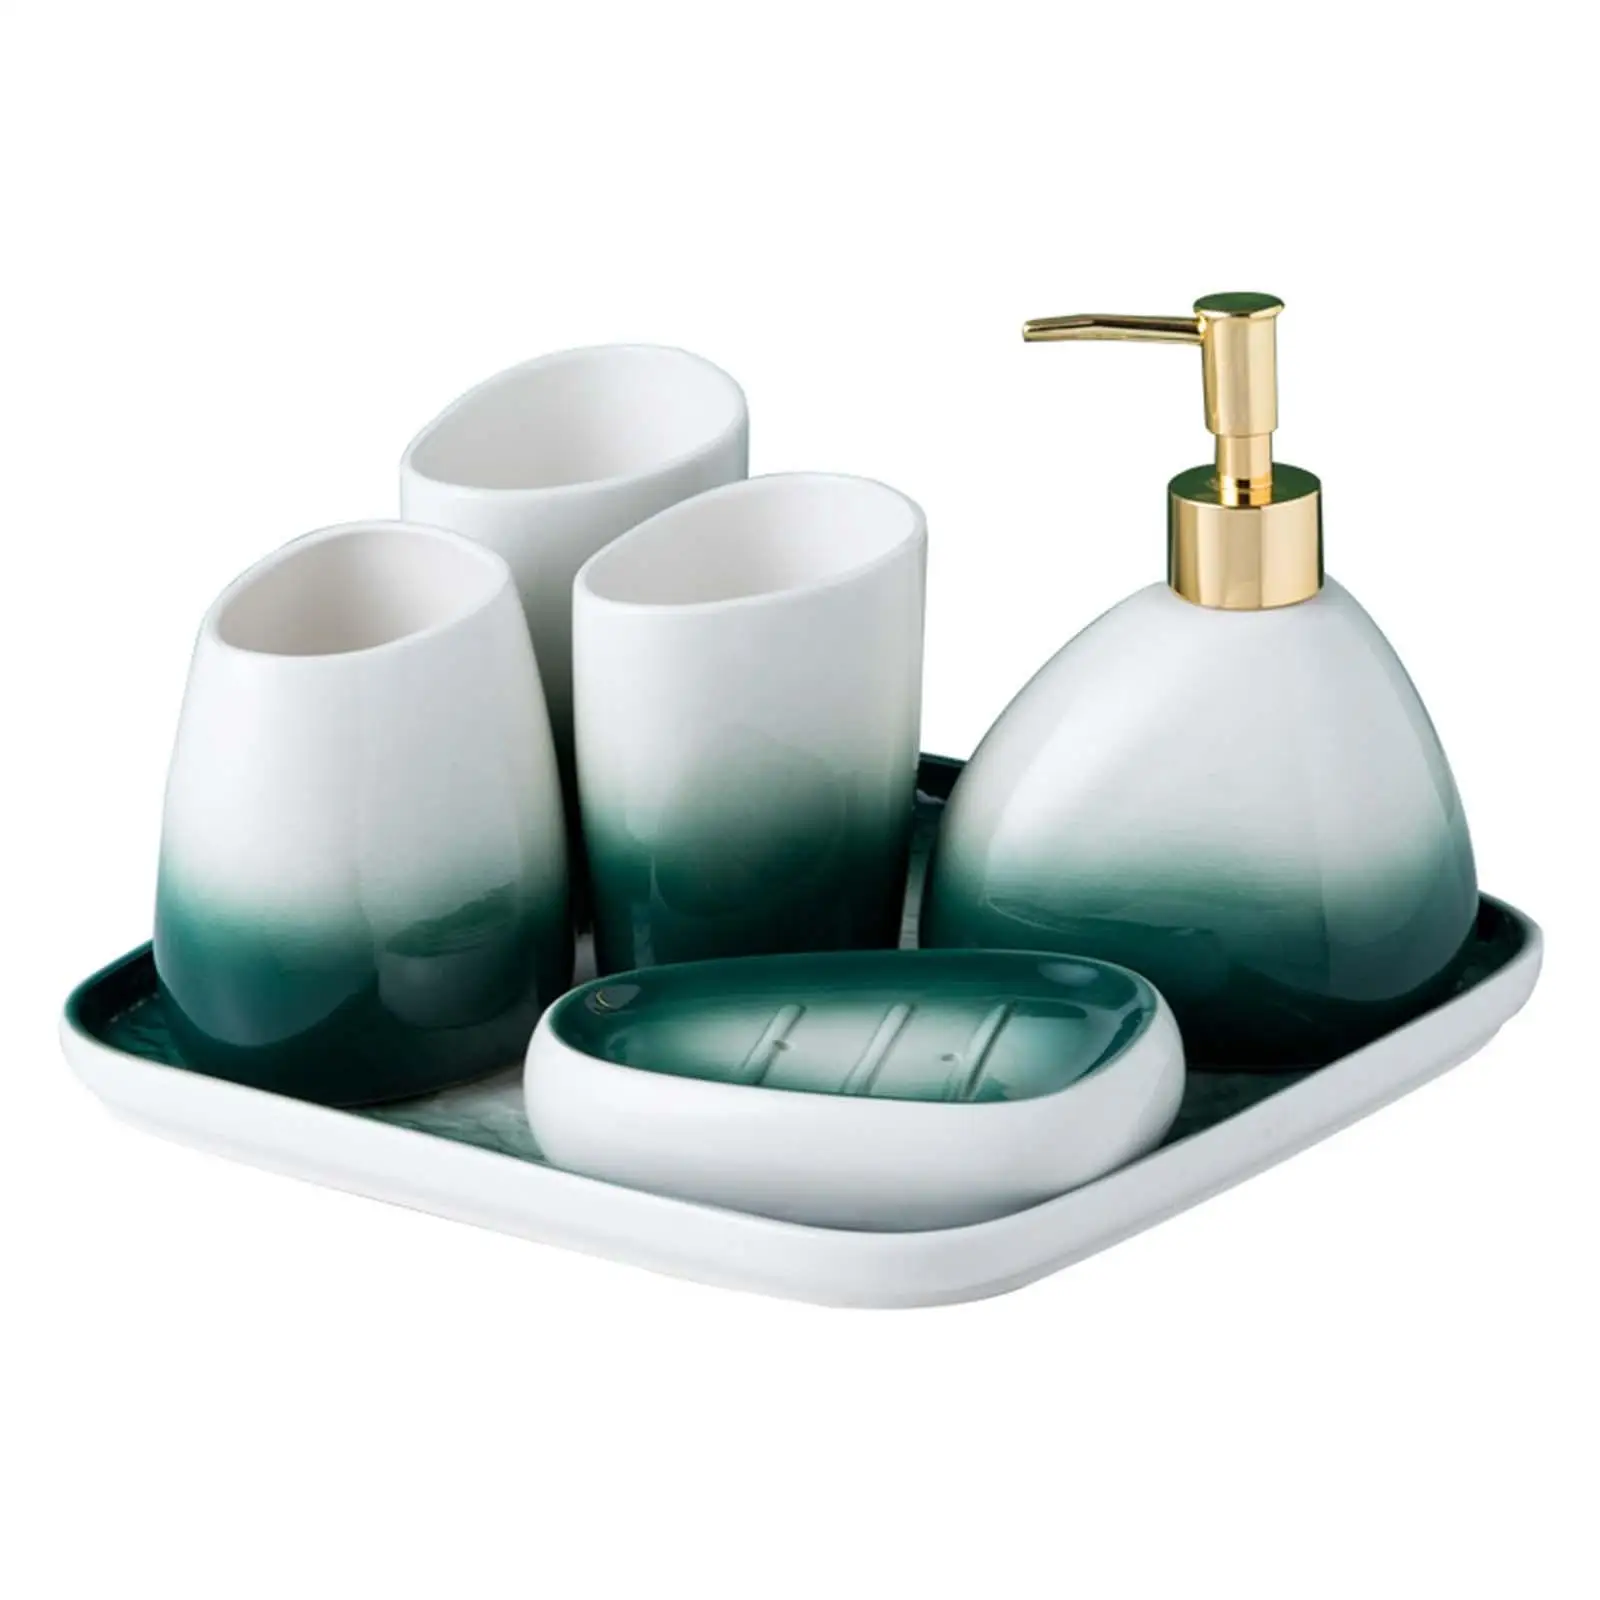 5x Nordic Bathroom Accessories Set Toothbrush Holder Soap Dish Lotion Bottle Bath Essential Set for Apartment Toilet Decoration